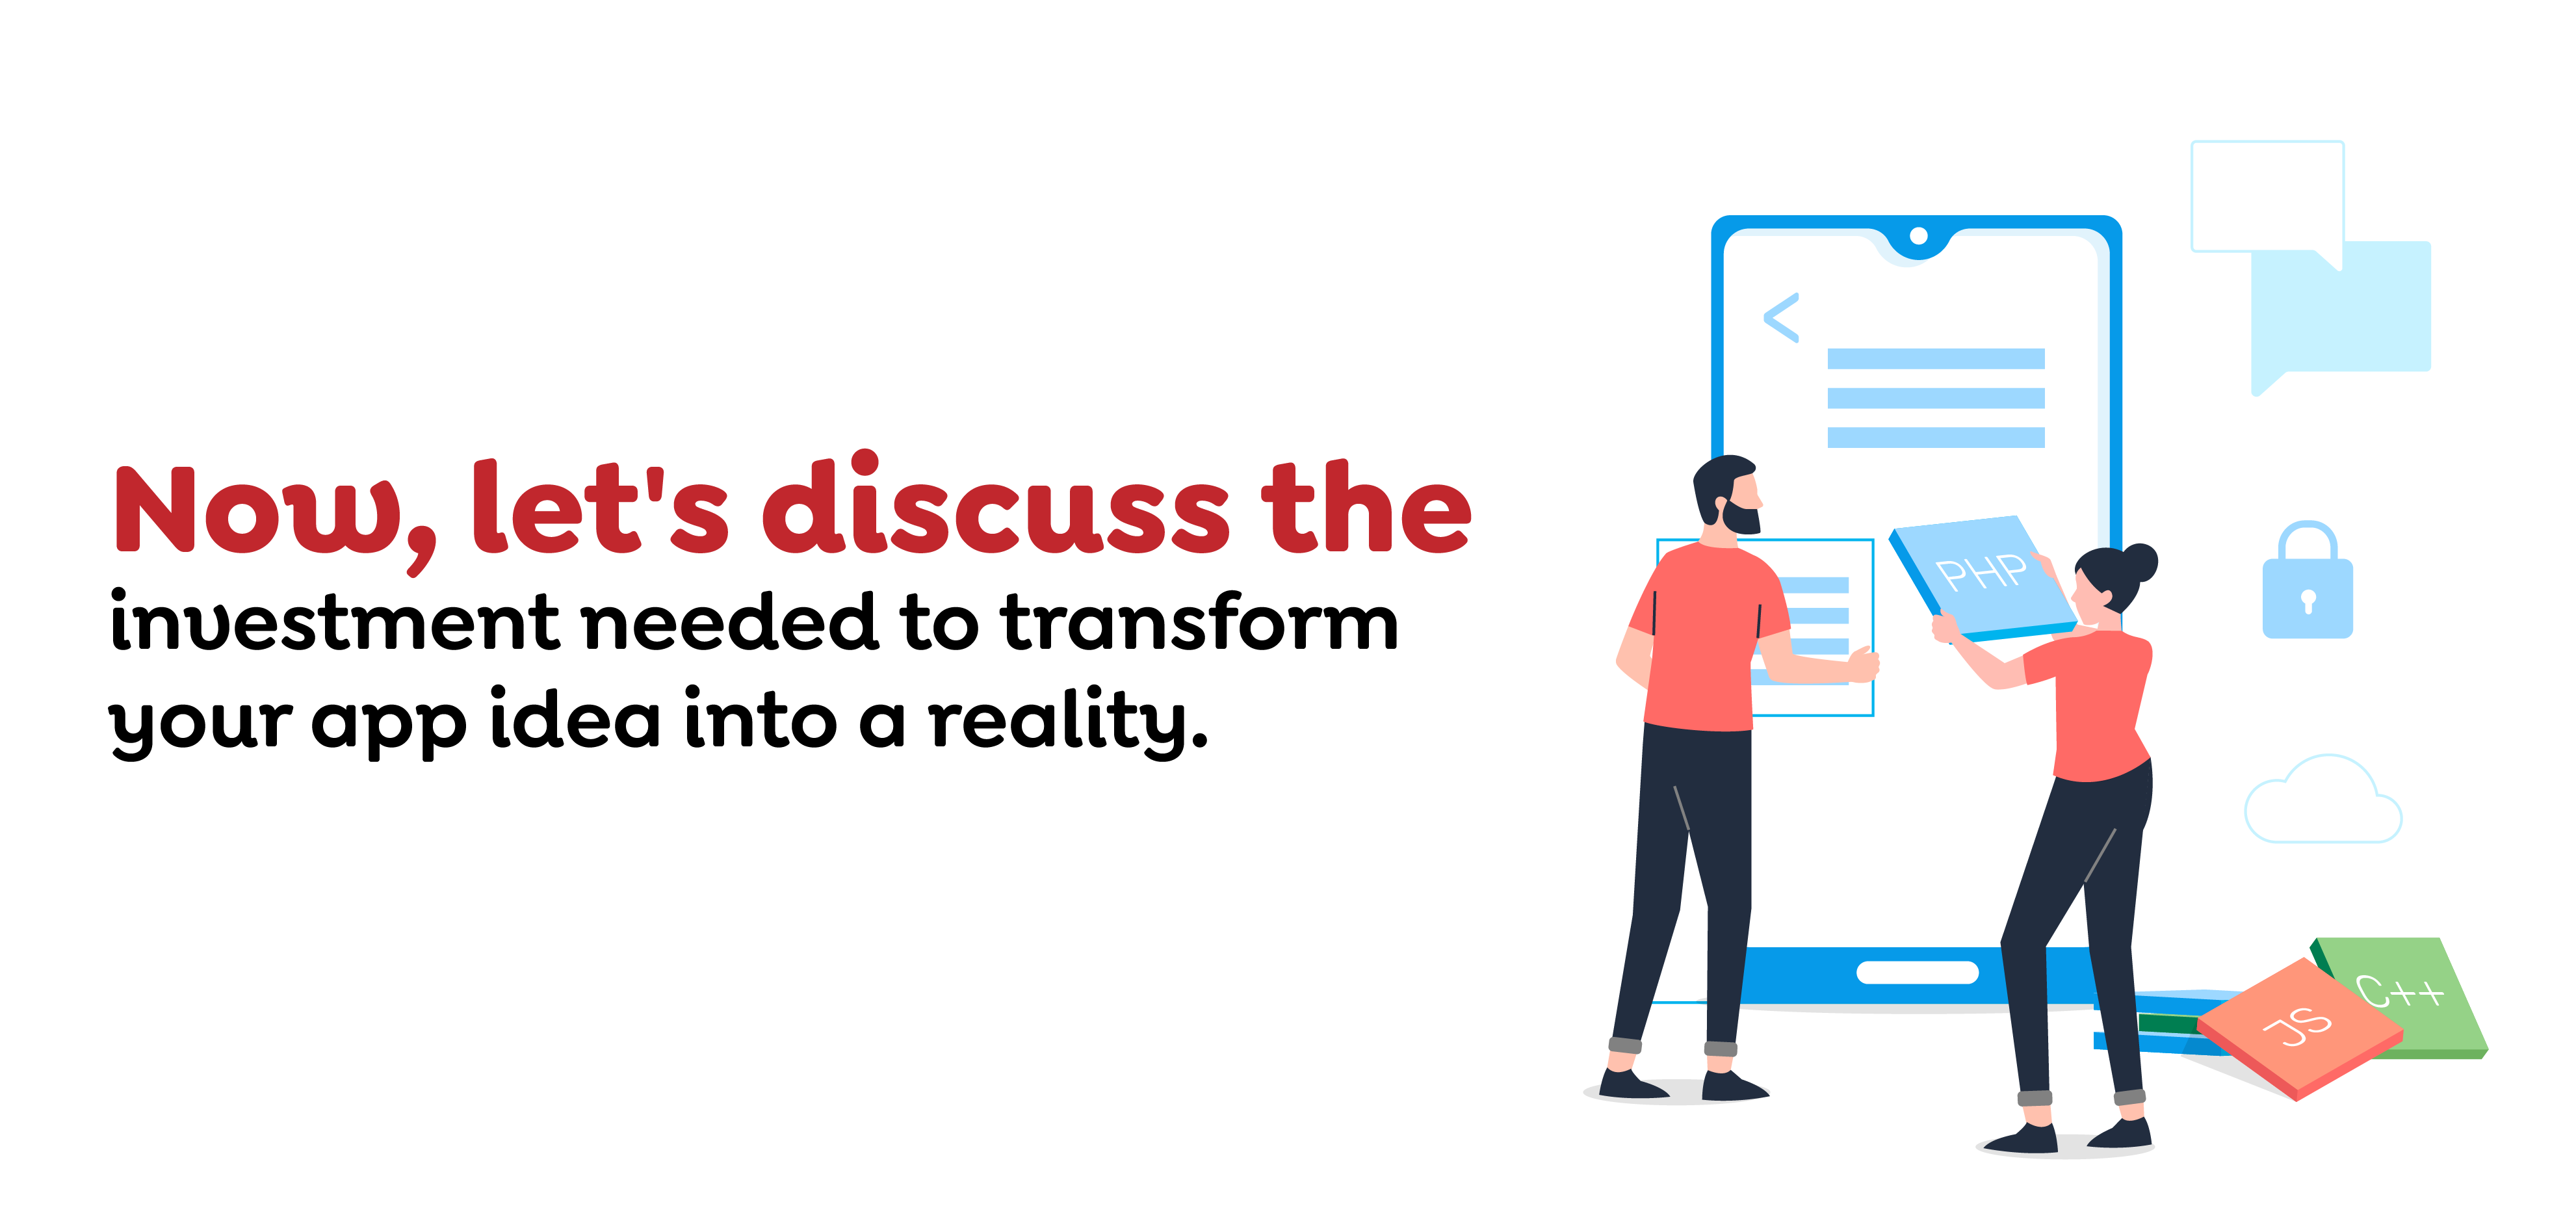  transform your app idea into a reality